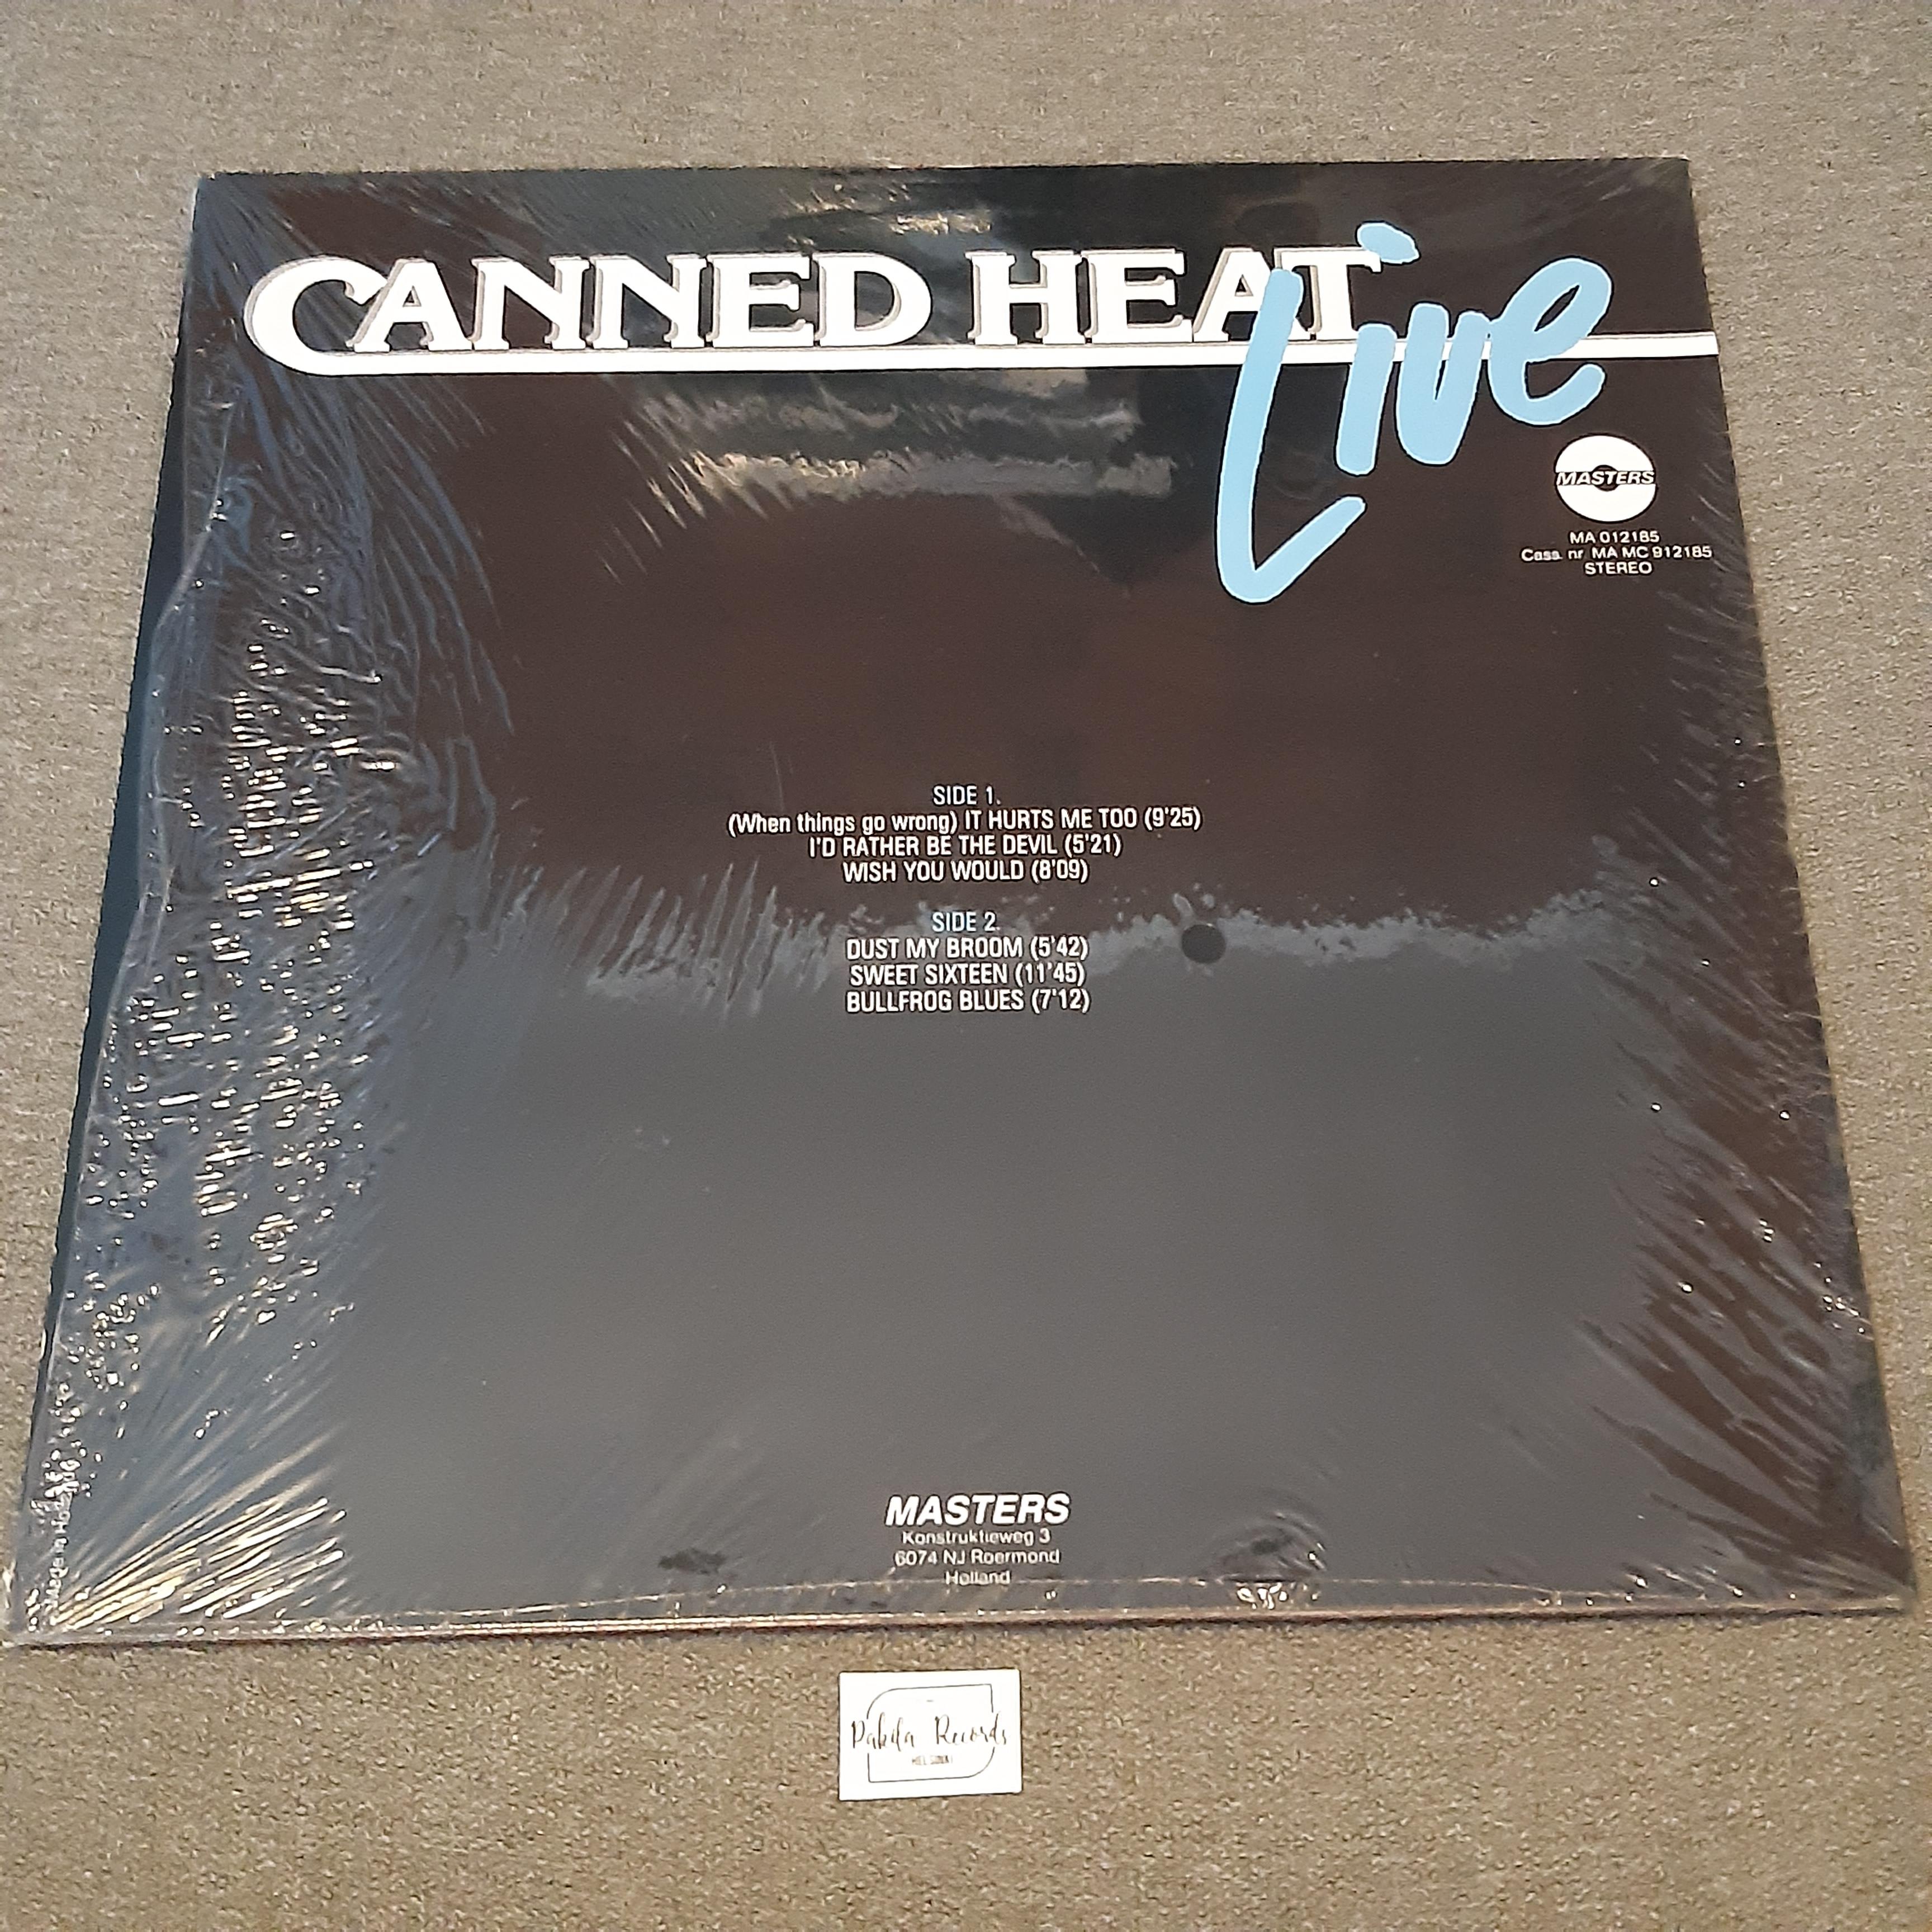 Canned Heat - Live - LP (käytetty)